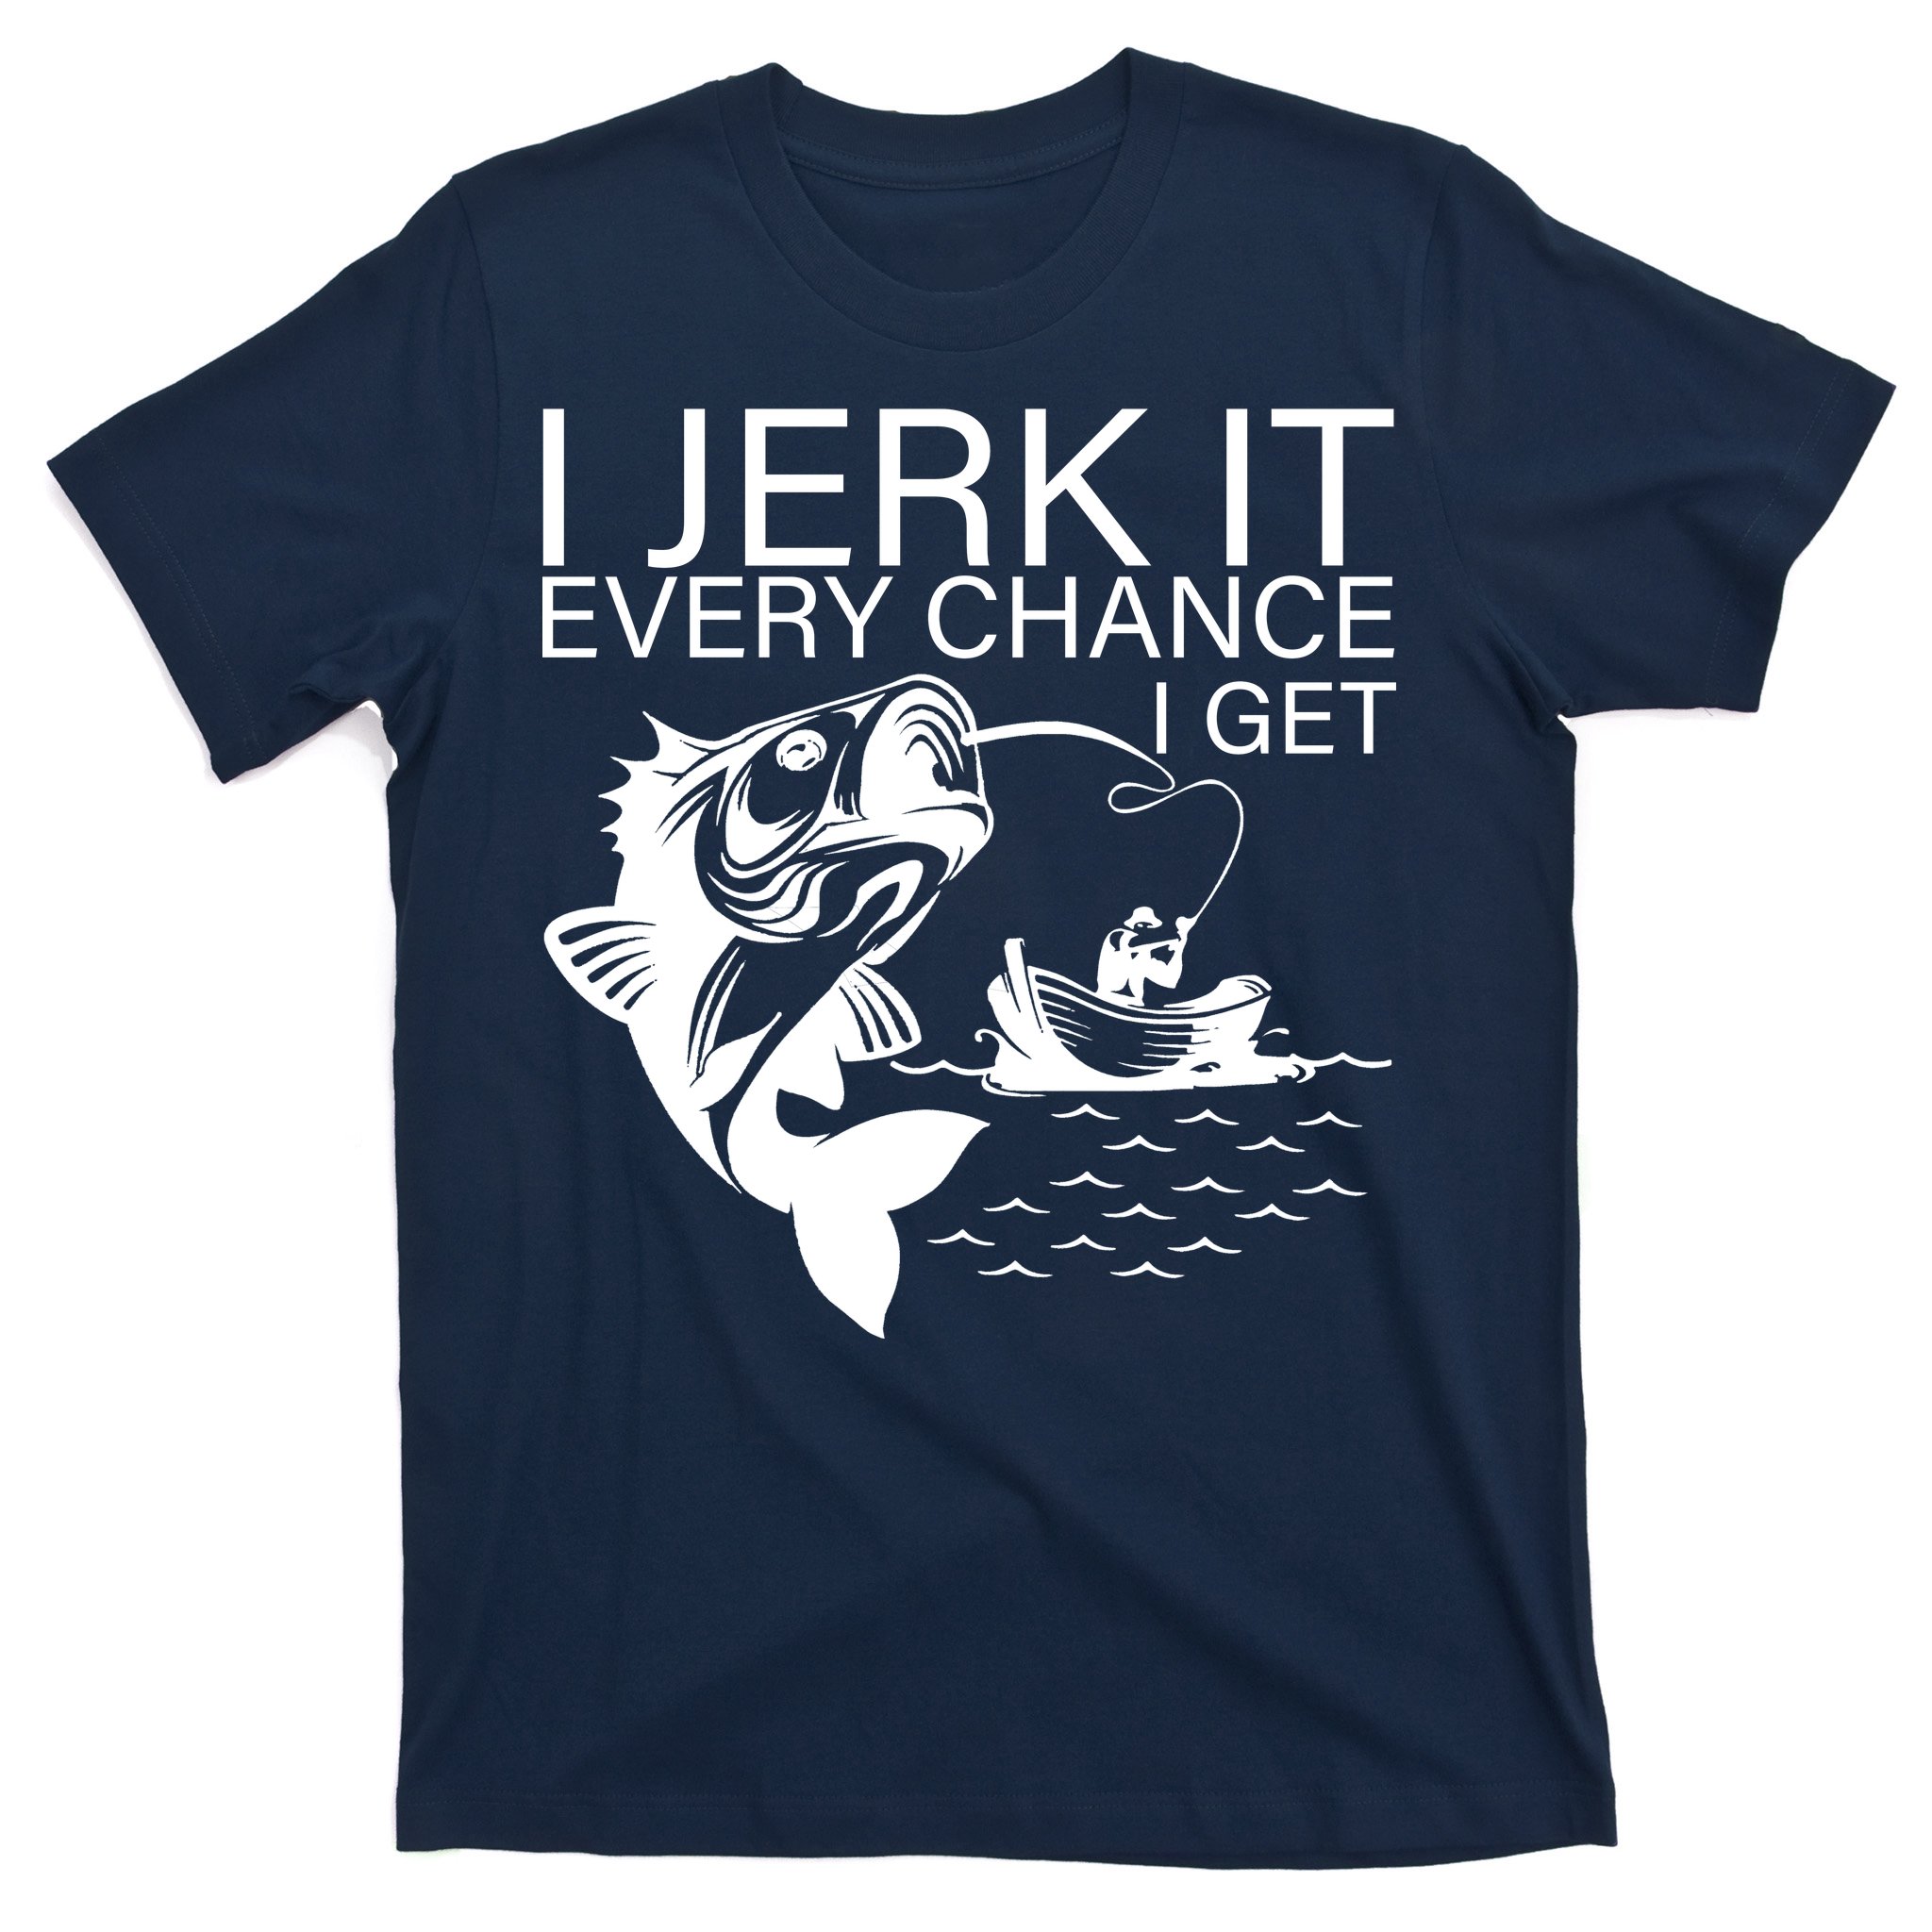 I Jerk It Every Chance I Get Funny Fishing T-Shirt